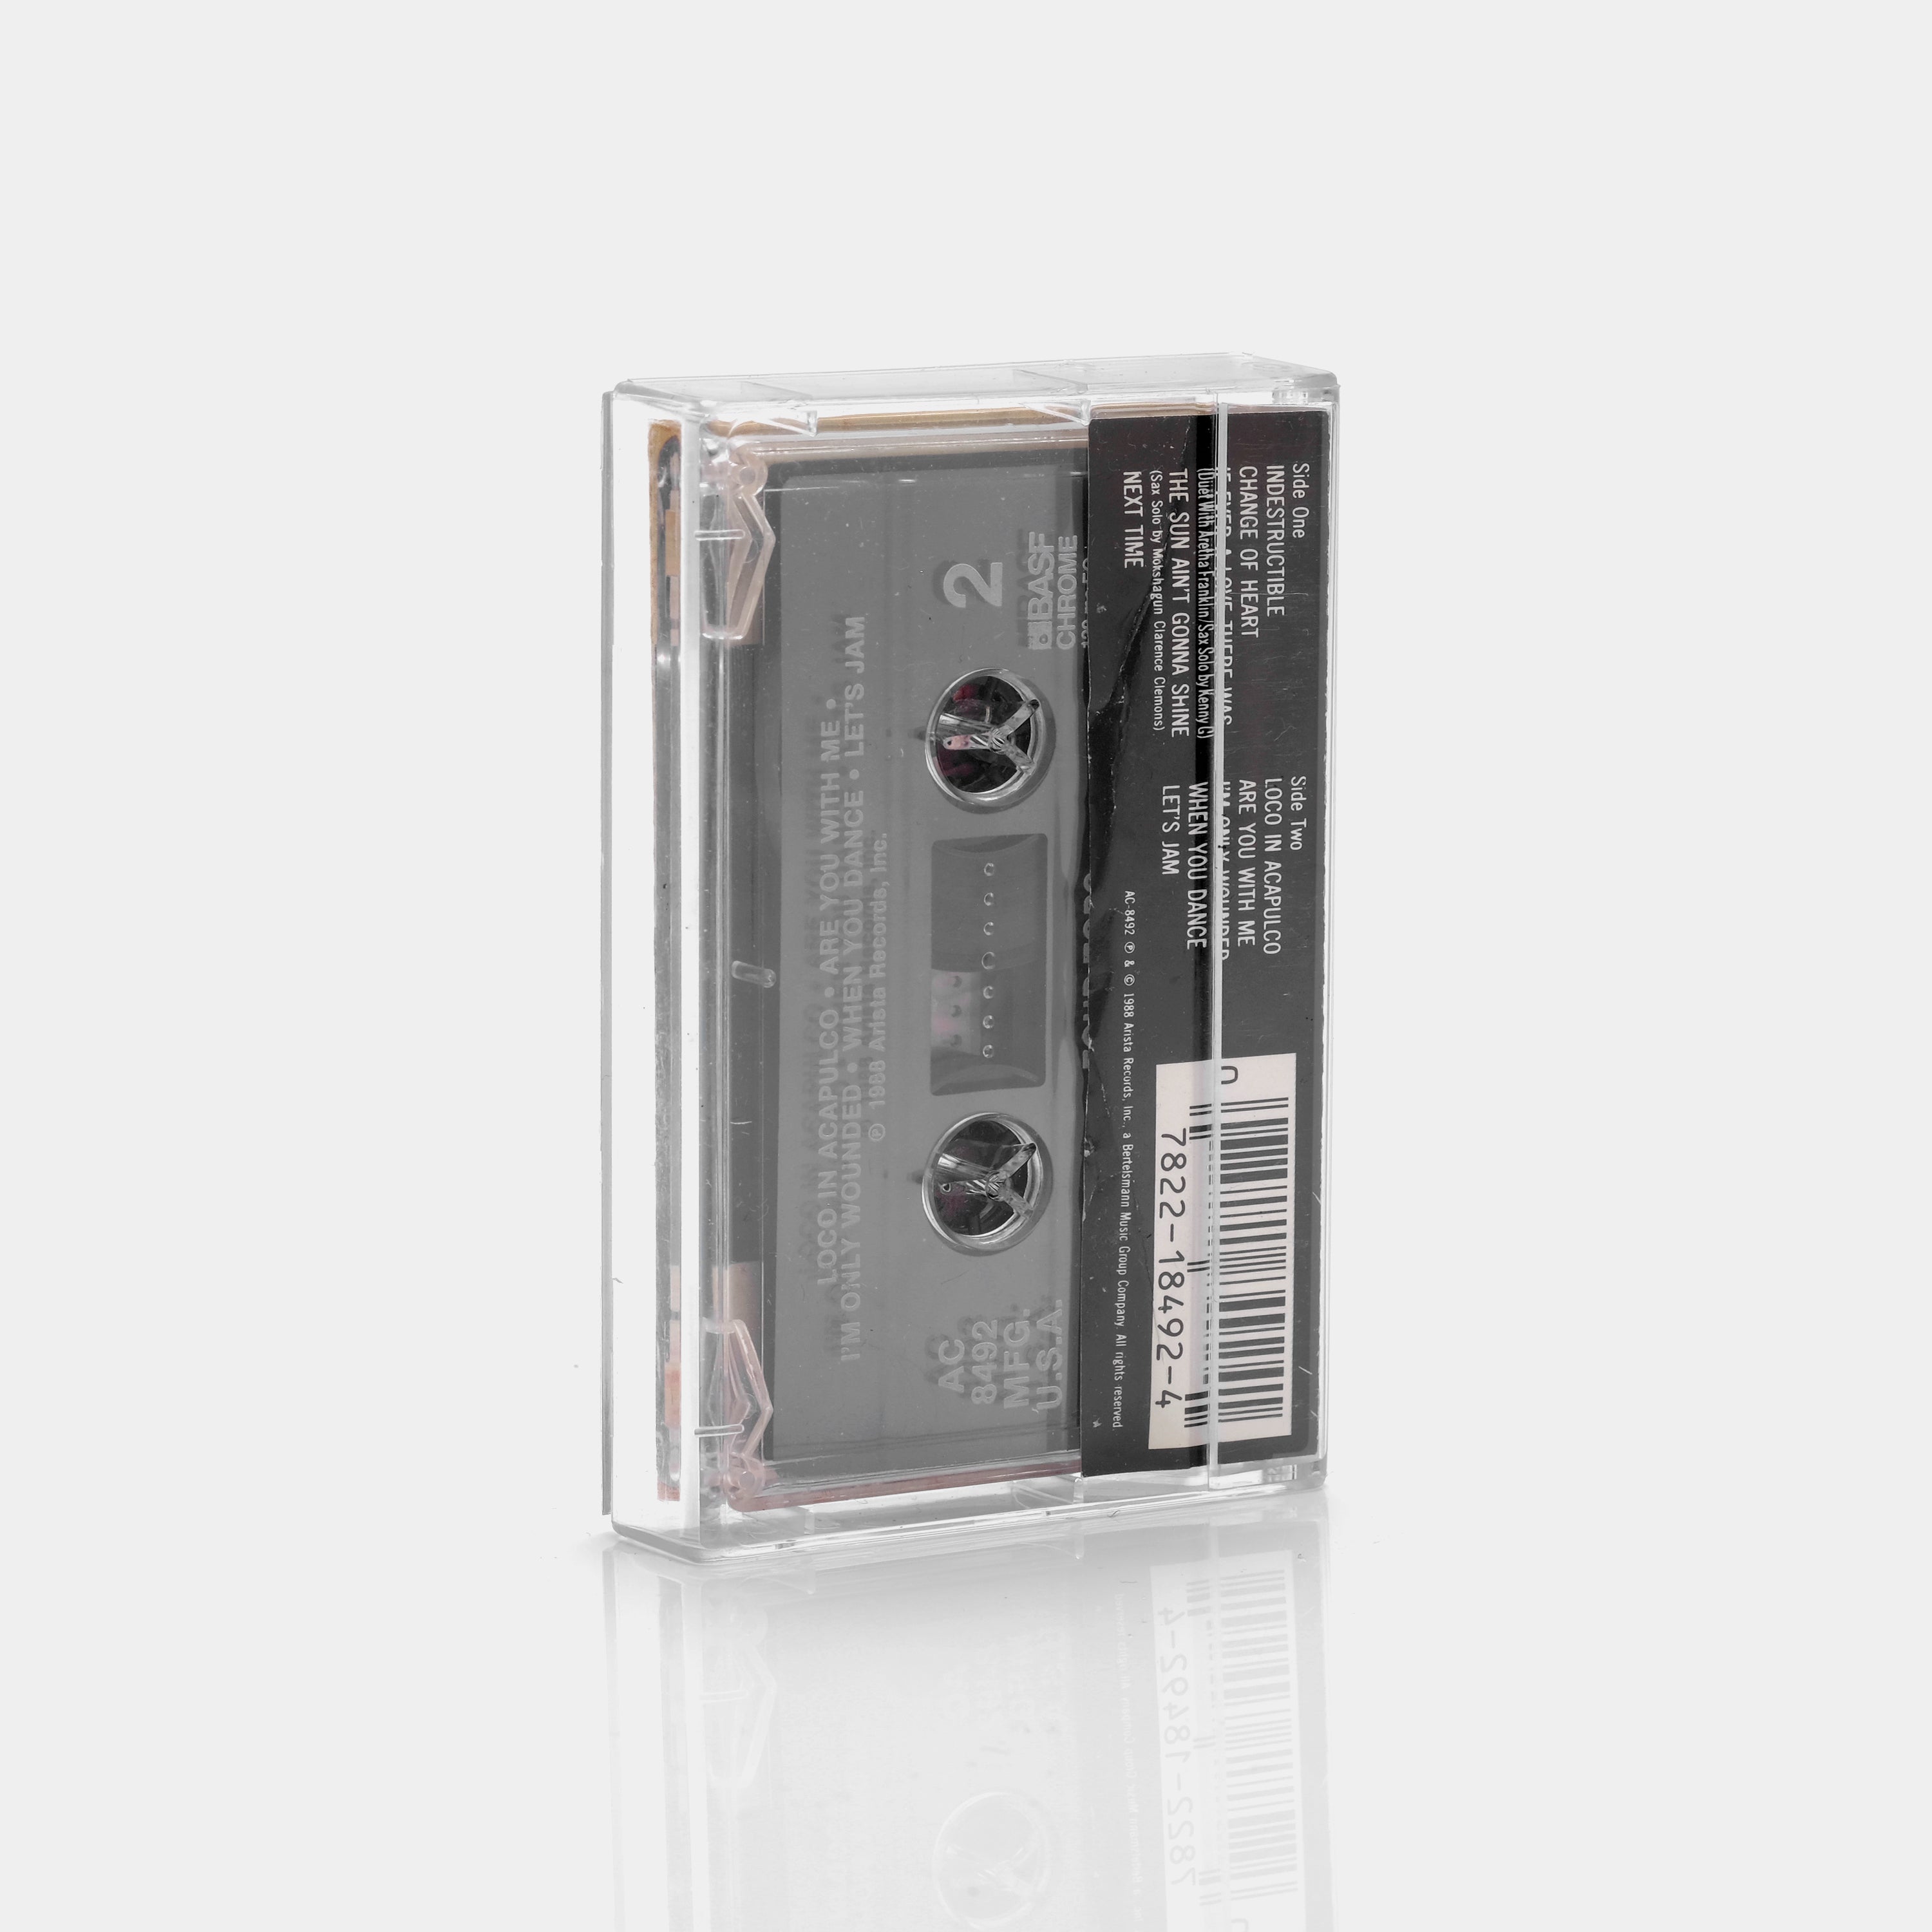 Four Tops - Indestructible Cassette Tape